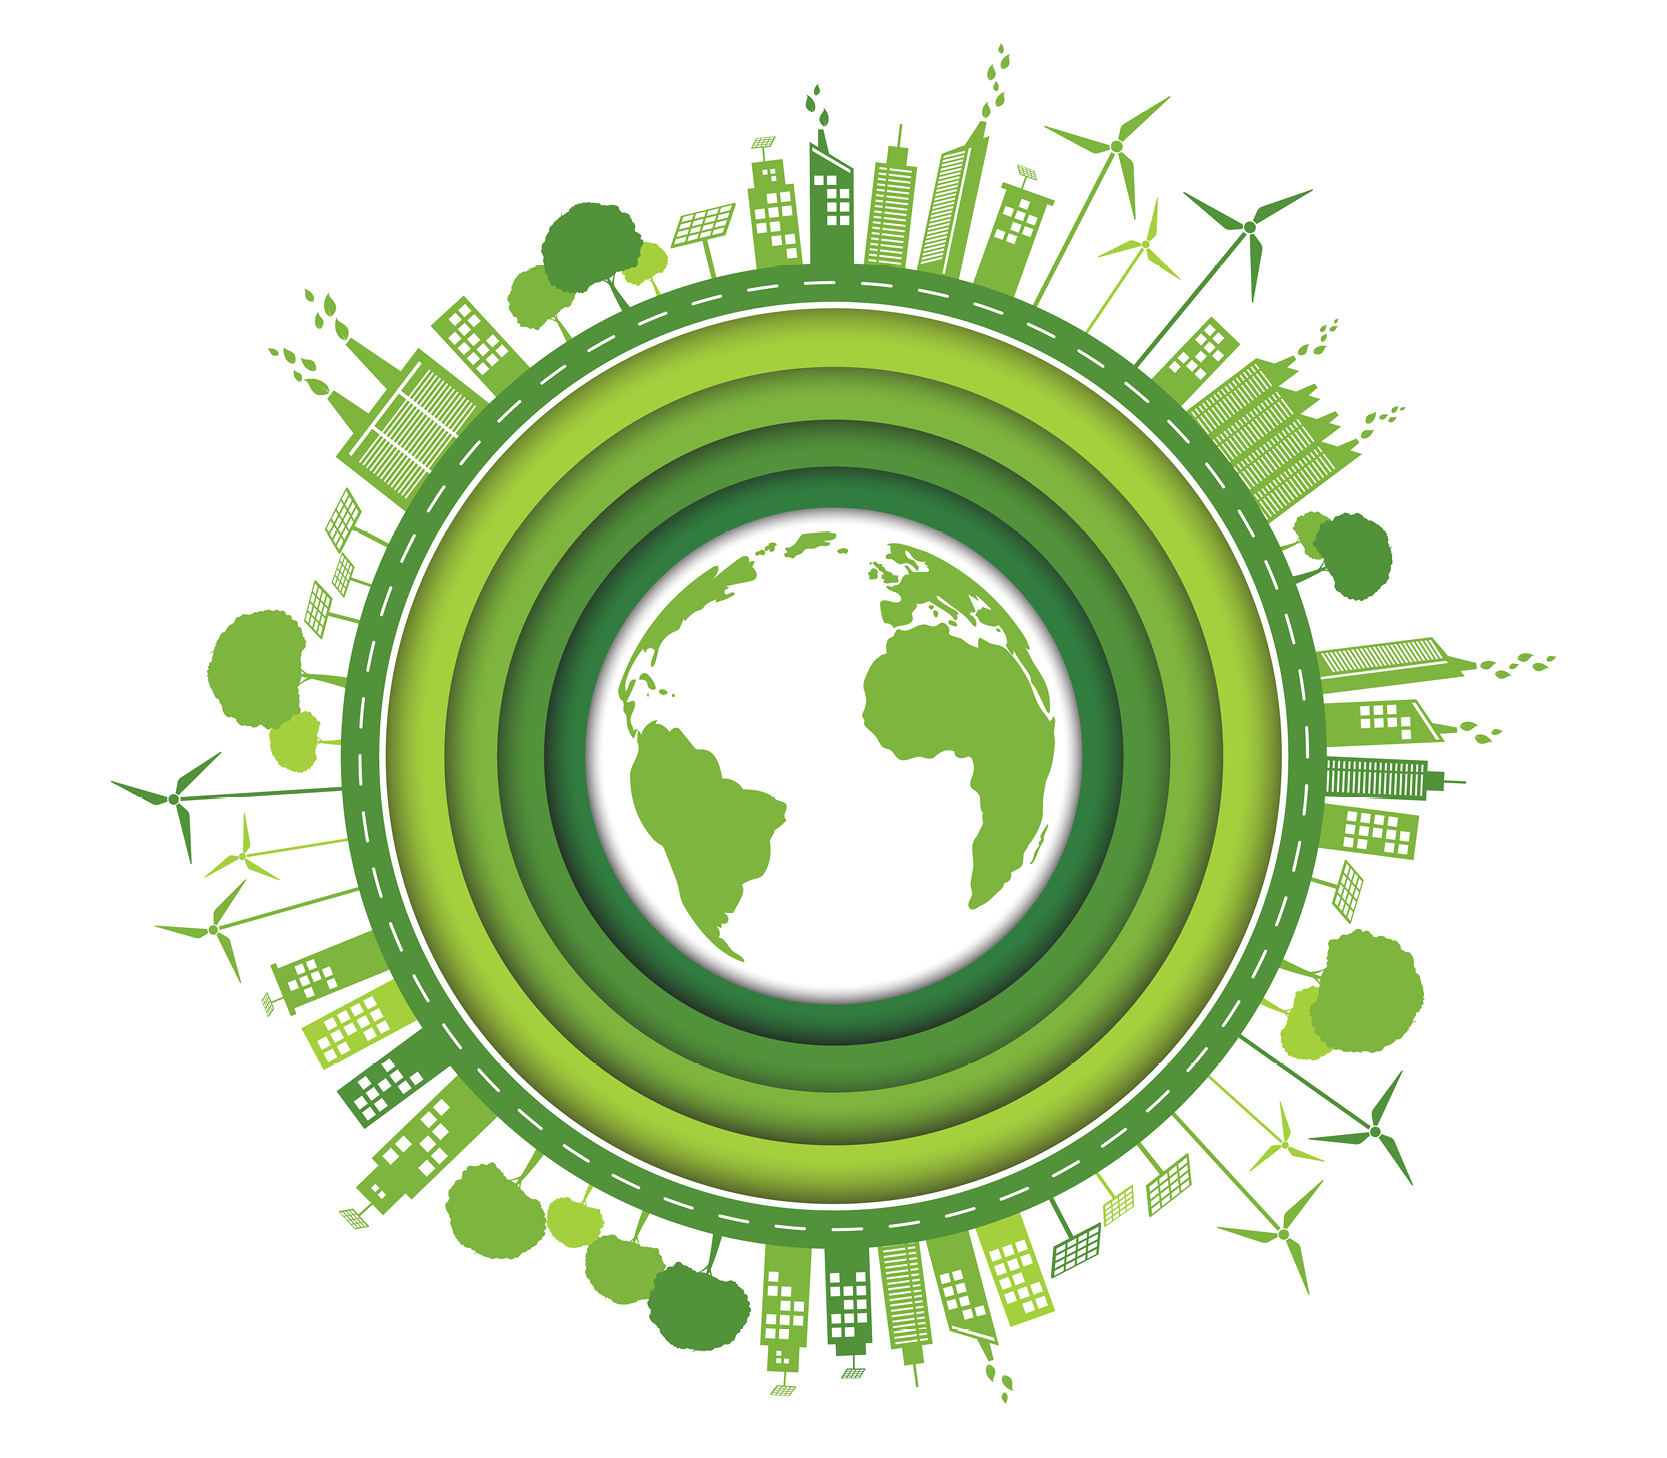 Enterprise Fund for International Climate Action